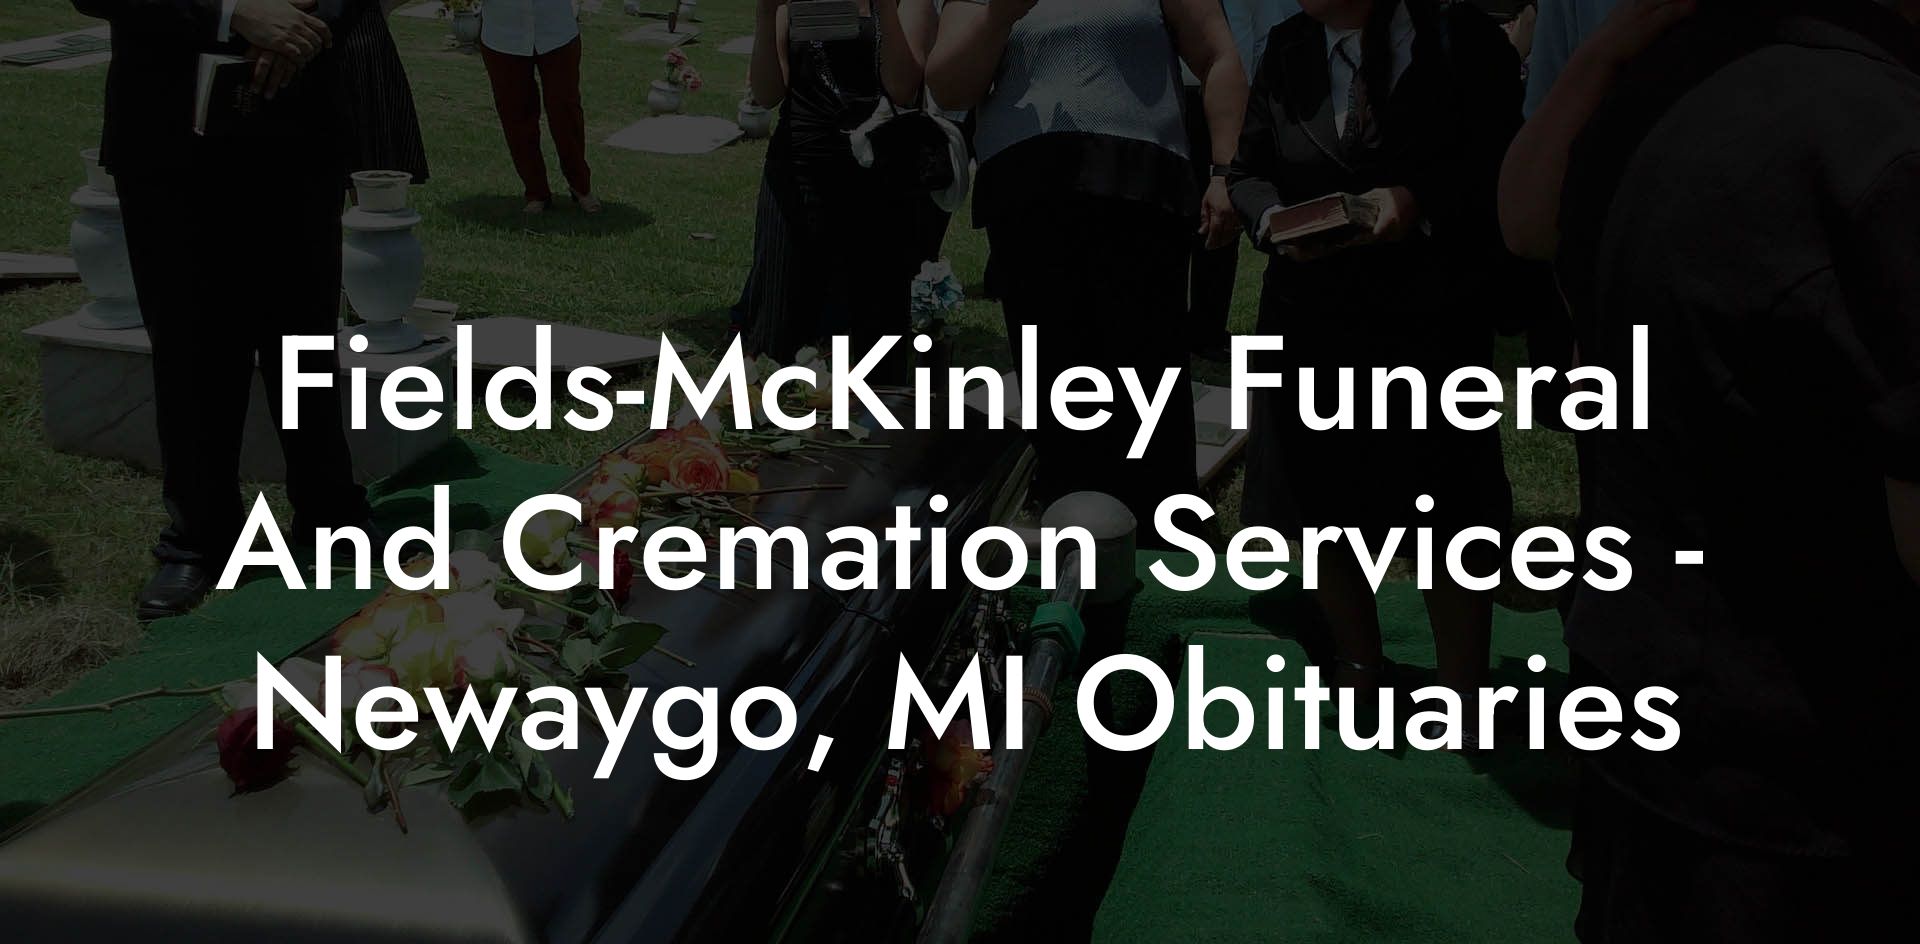 Fields-McKinley Funeral And Cremation Services - Newaygo, MI Obituaries